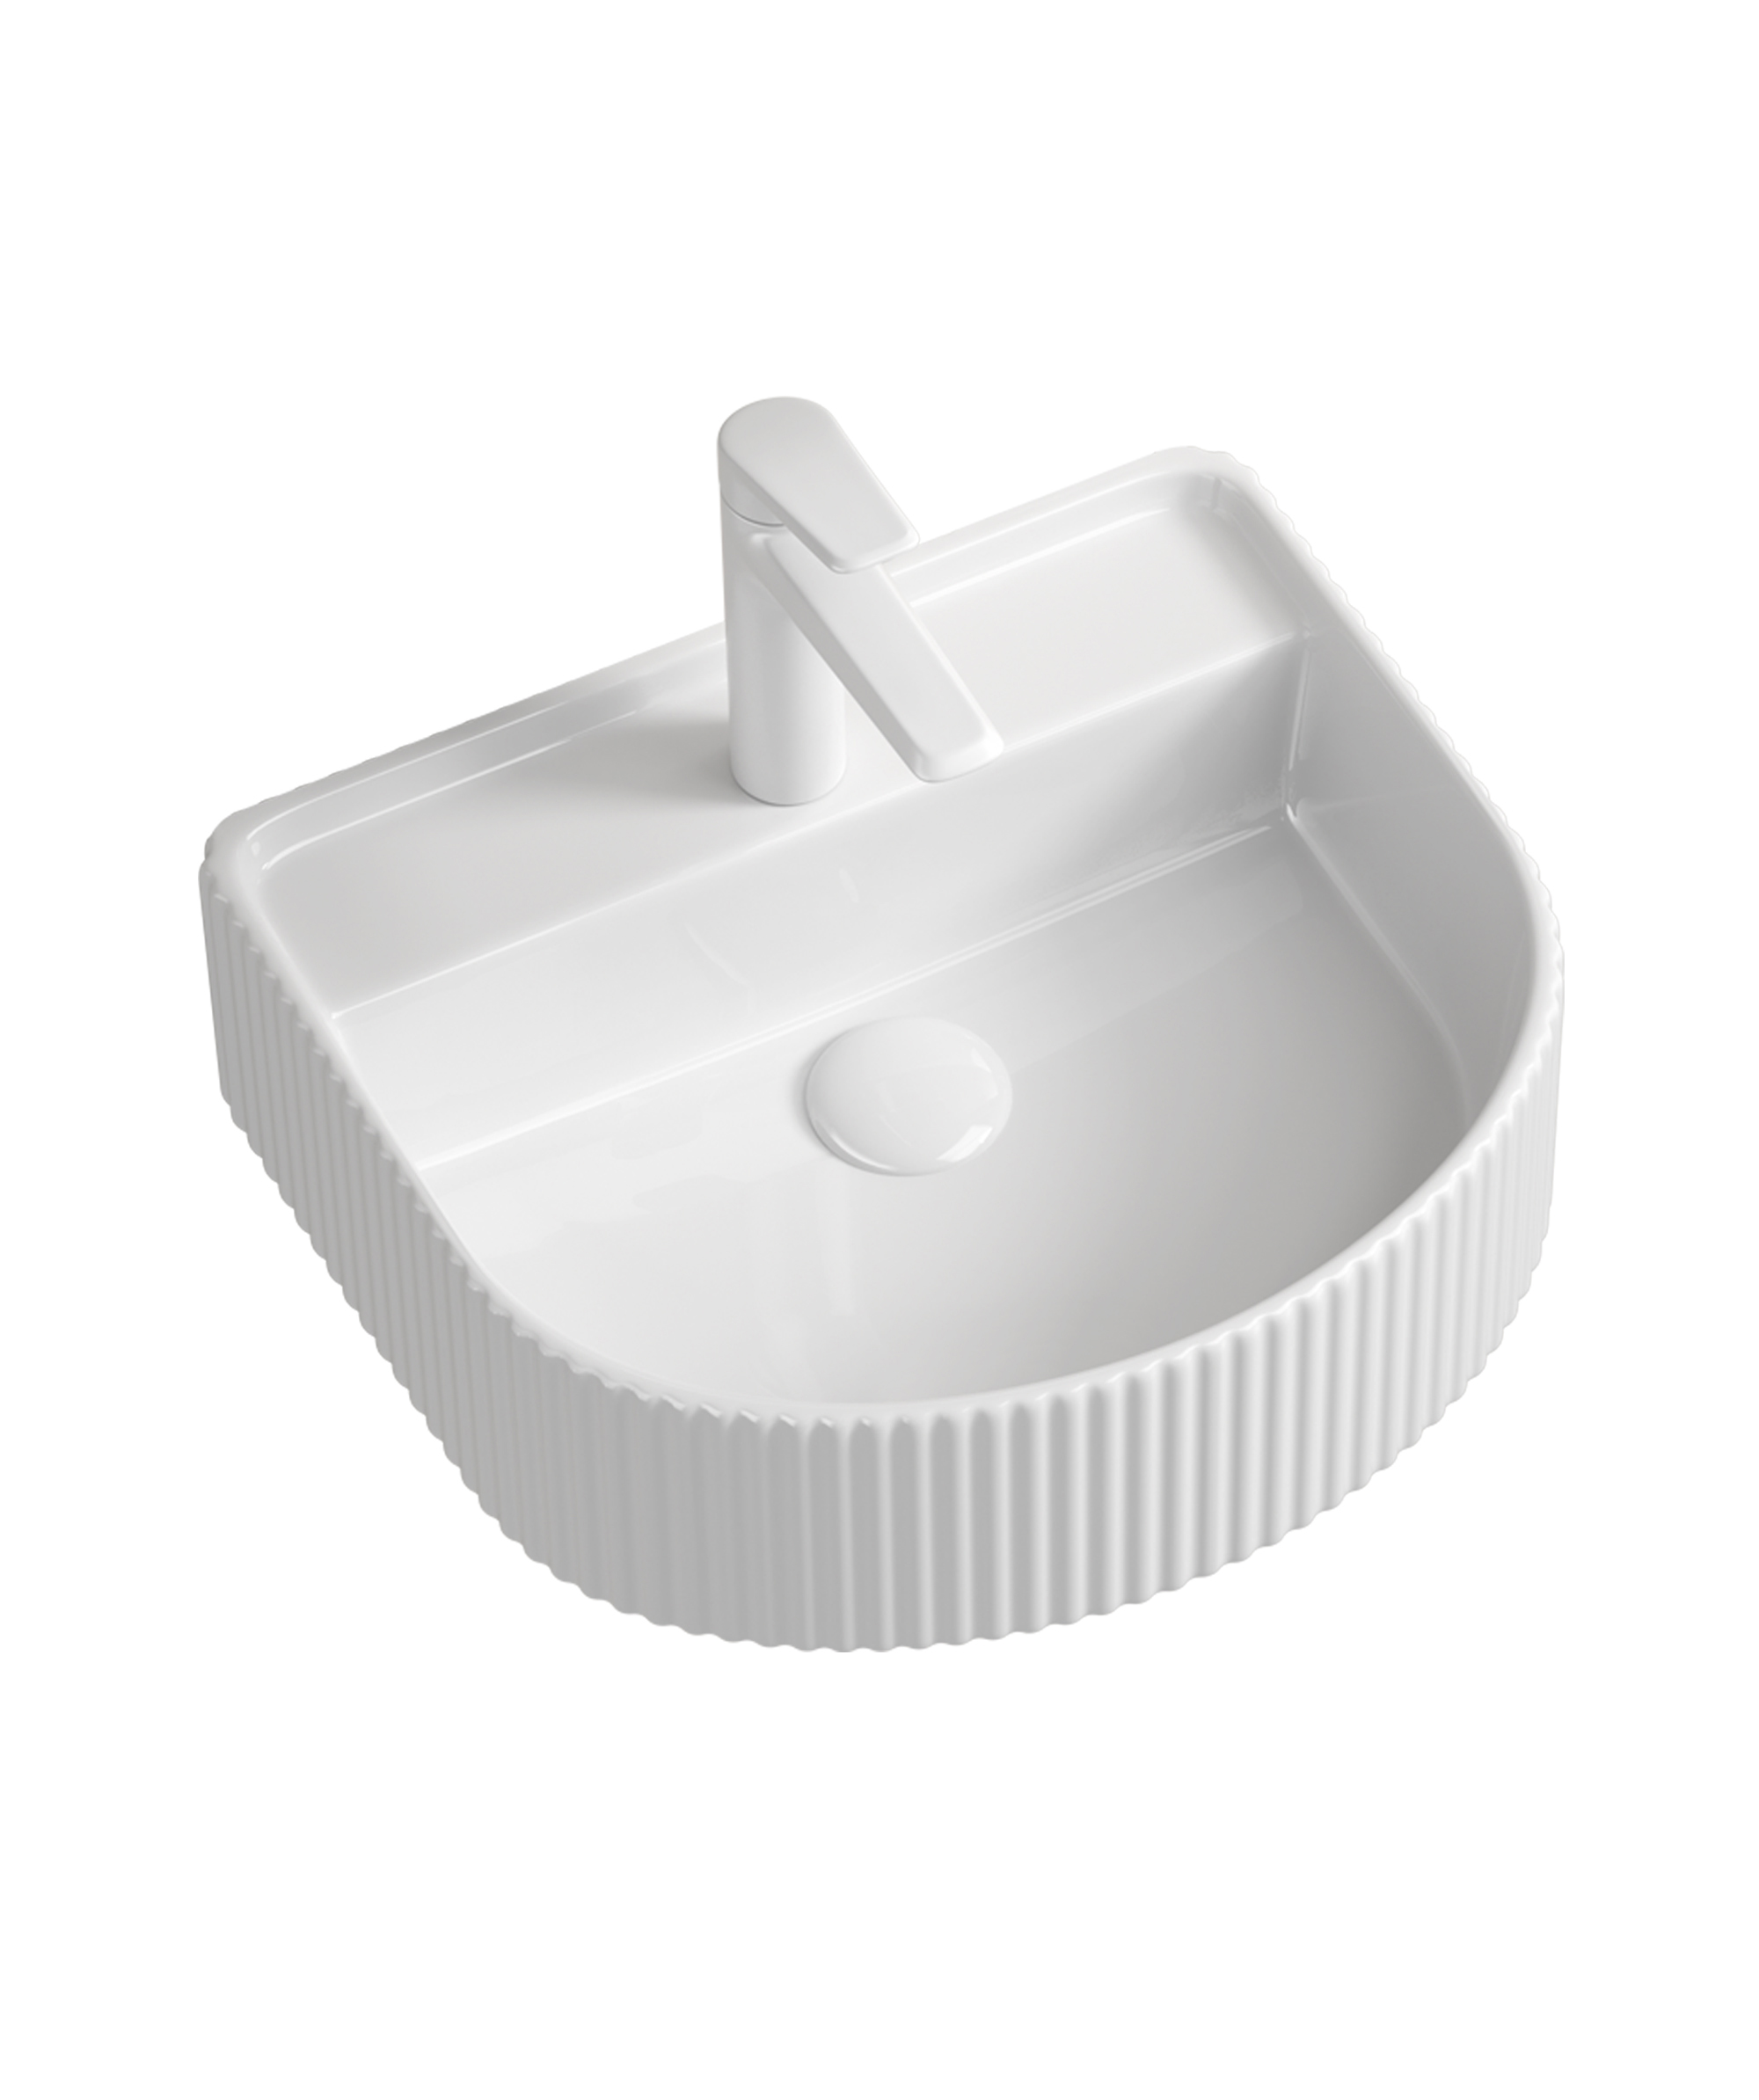 Cleo 404 ceramic basin - White Gloss